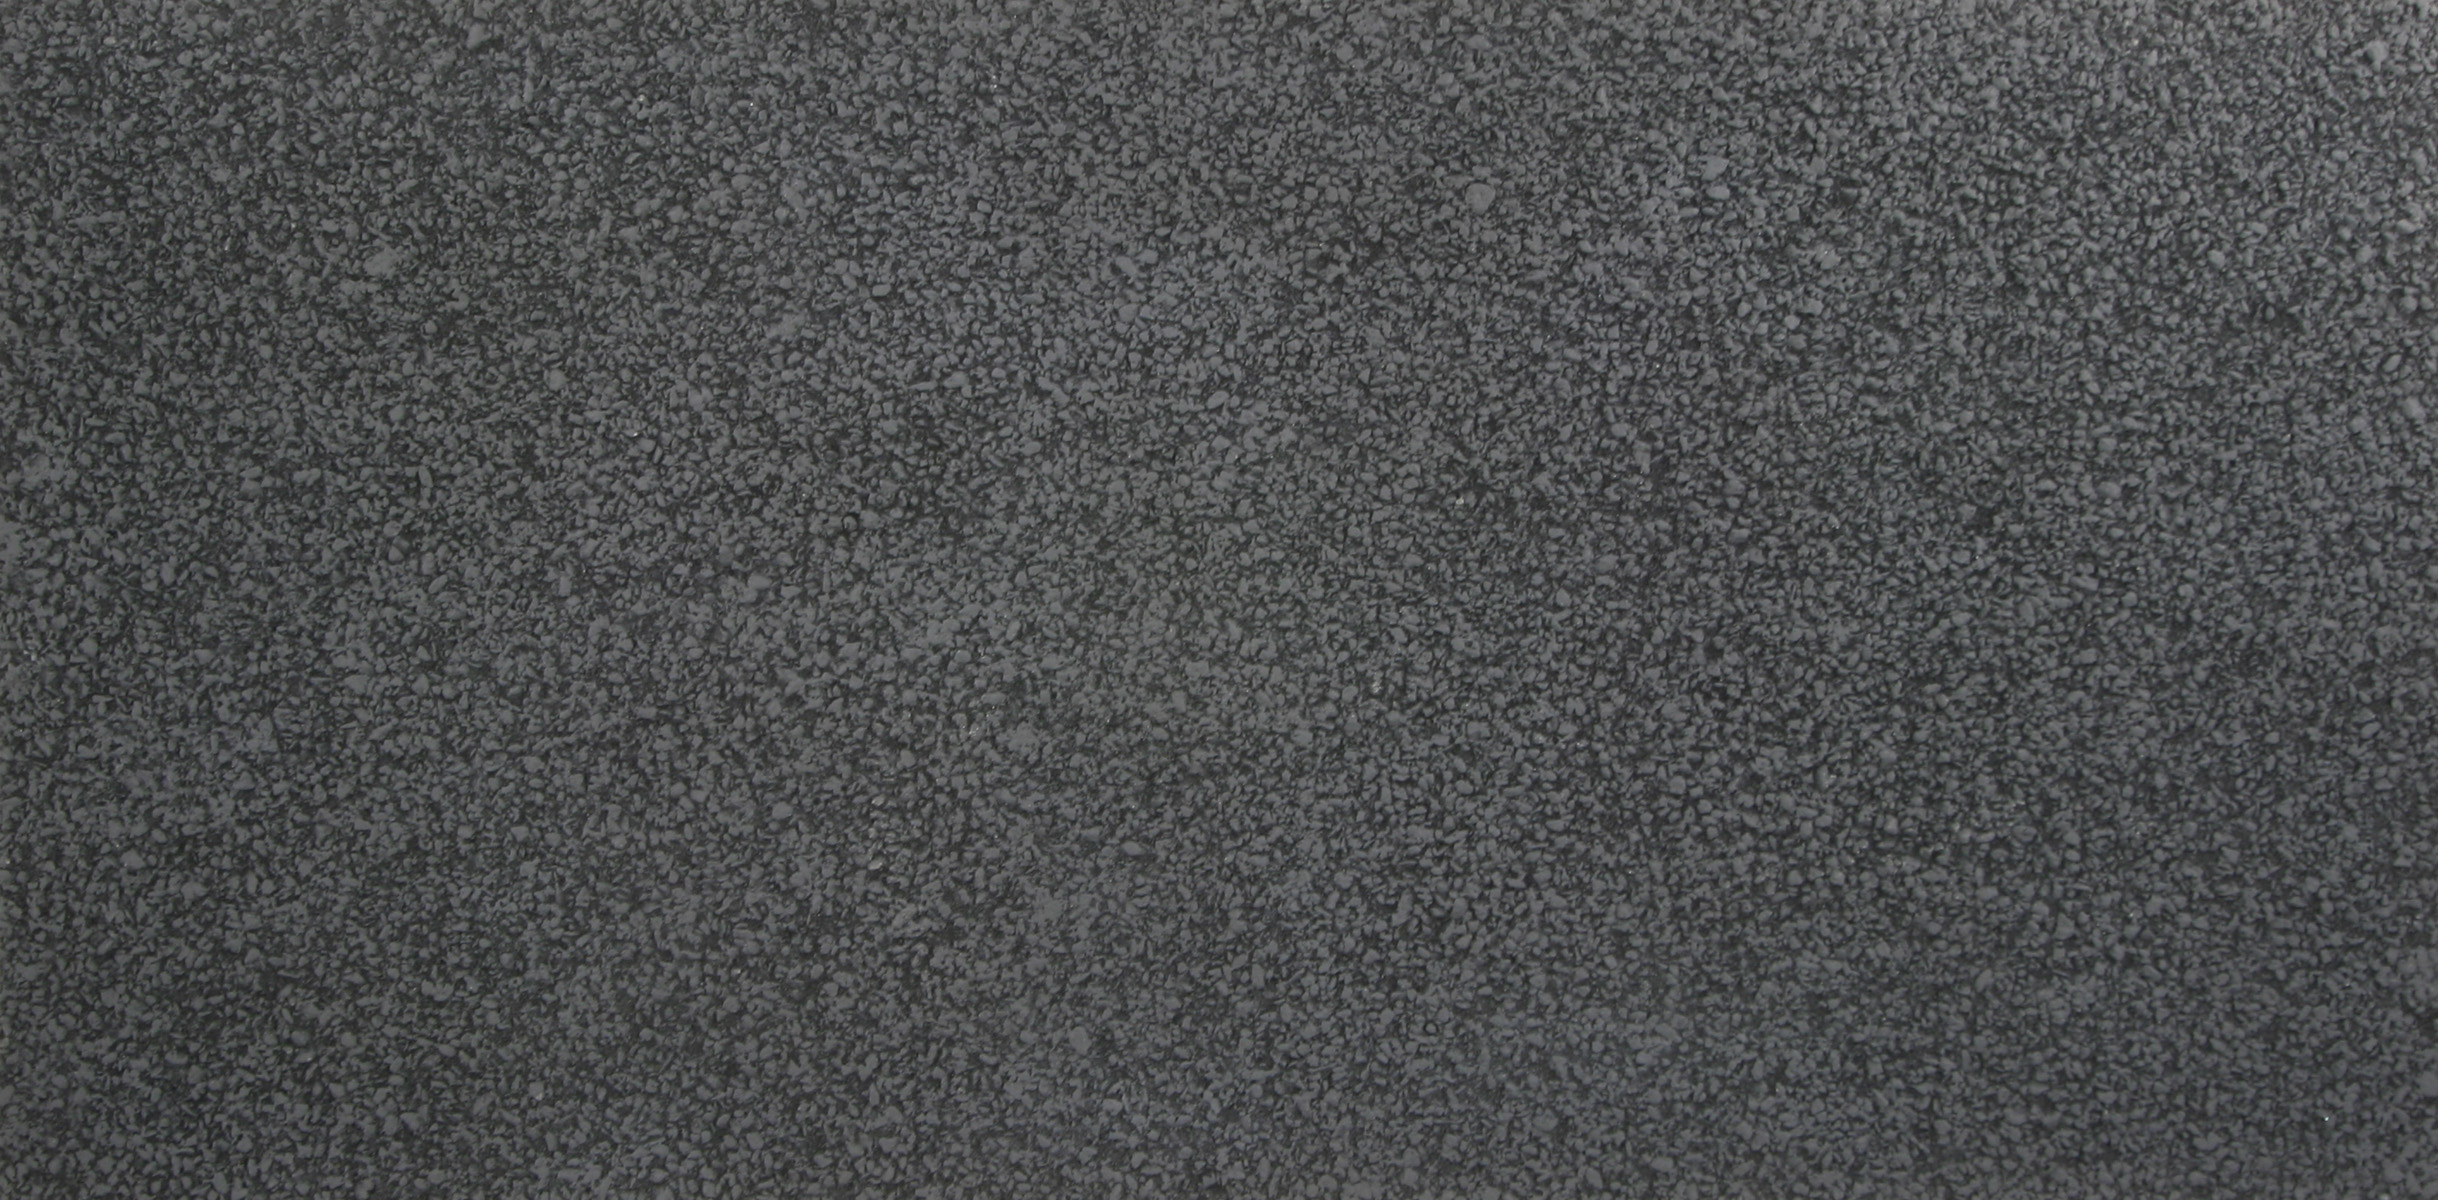 Asphalt background texture image